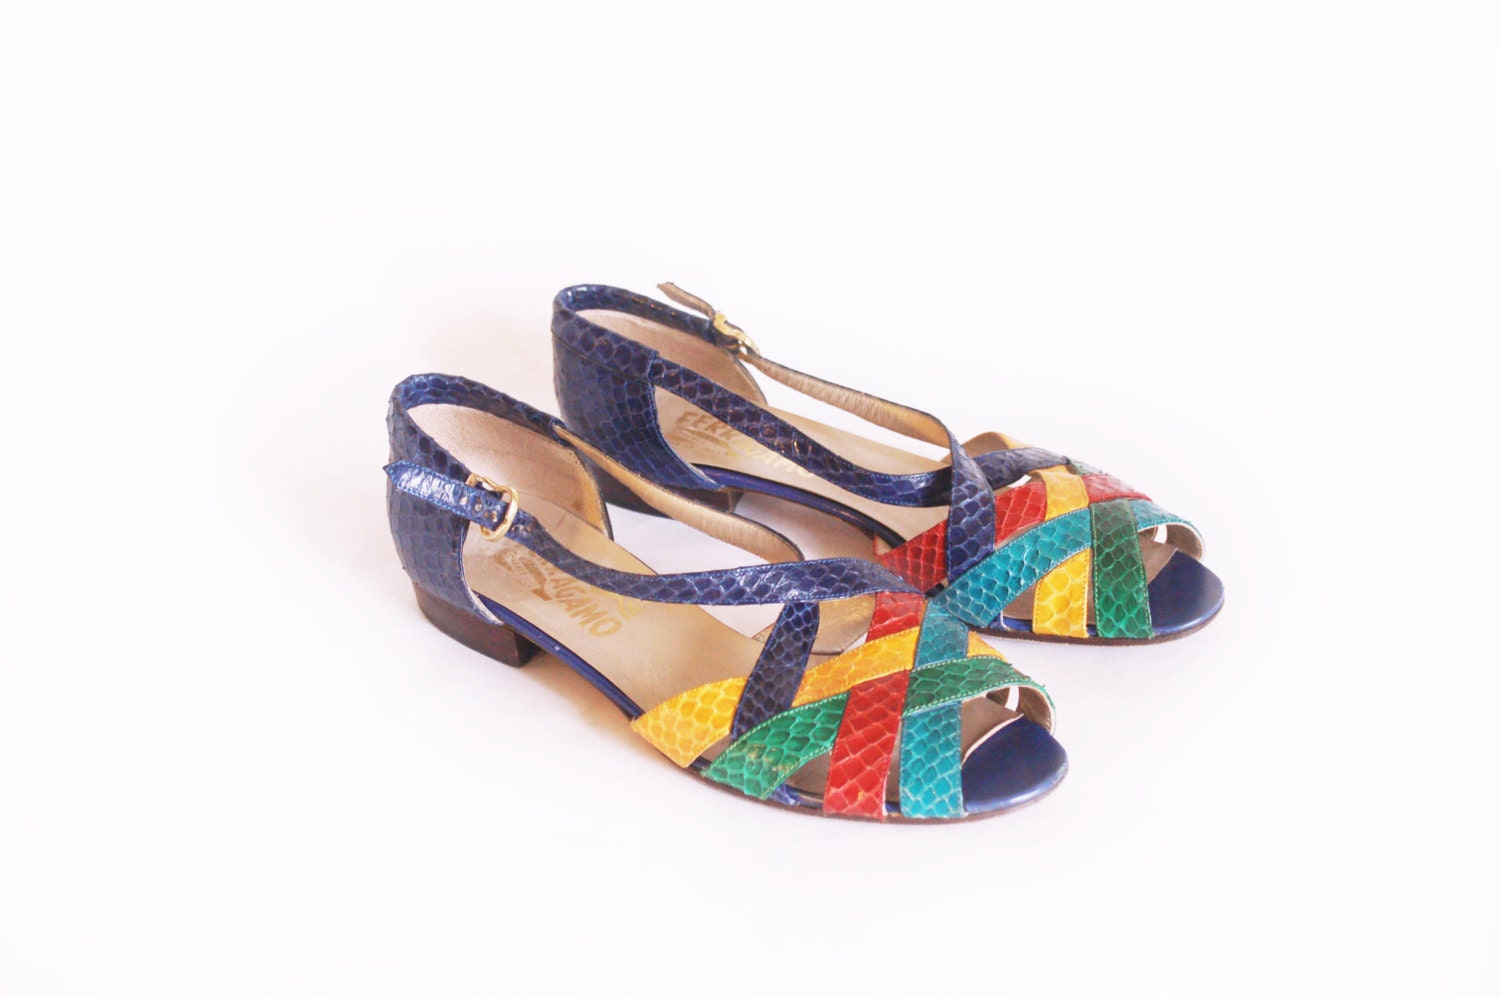 Vintage SALVATORE FERRAGAMO 70s sandals /genuine Snakeskin colorful leather shoes Eur 37 Us 7 UK 4.5 - Skomoroki